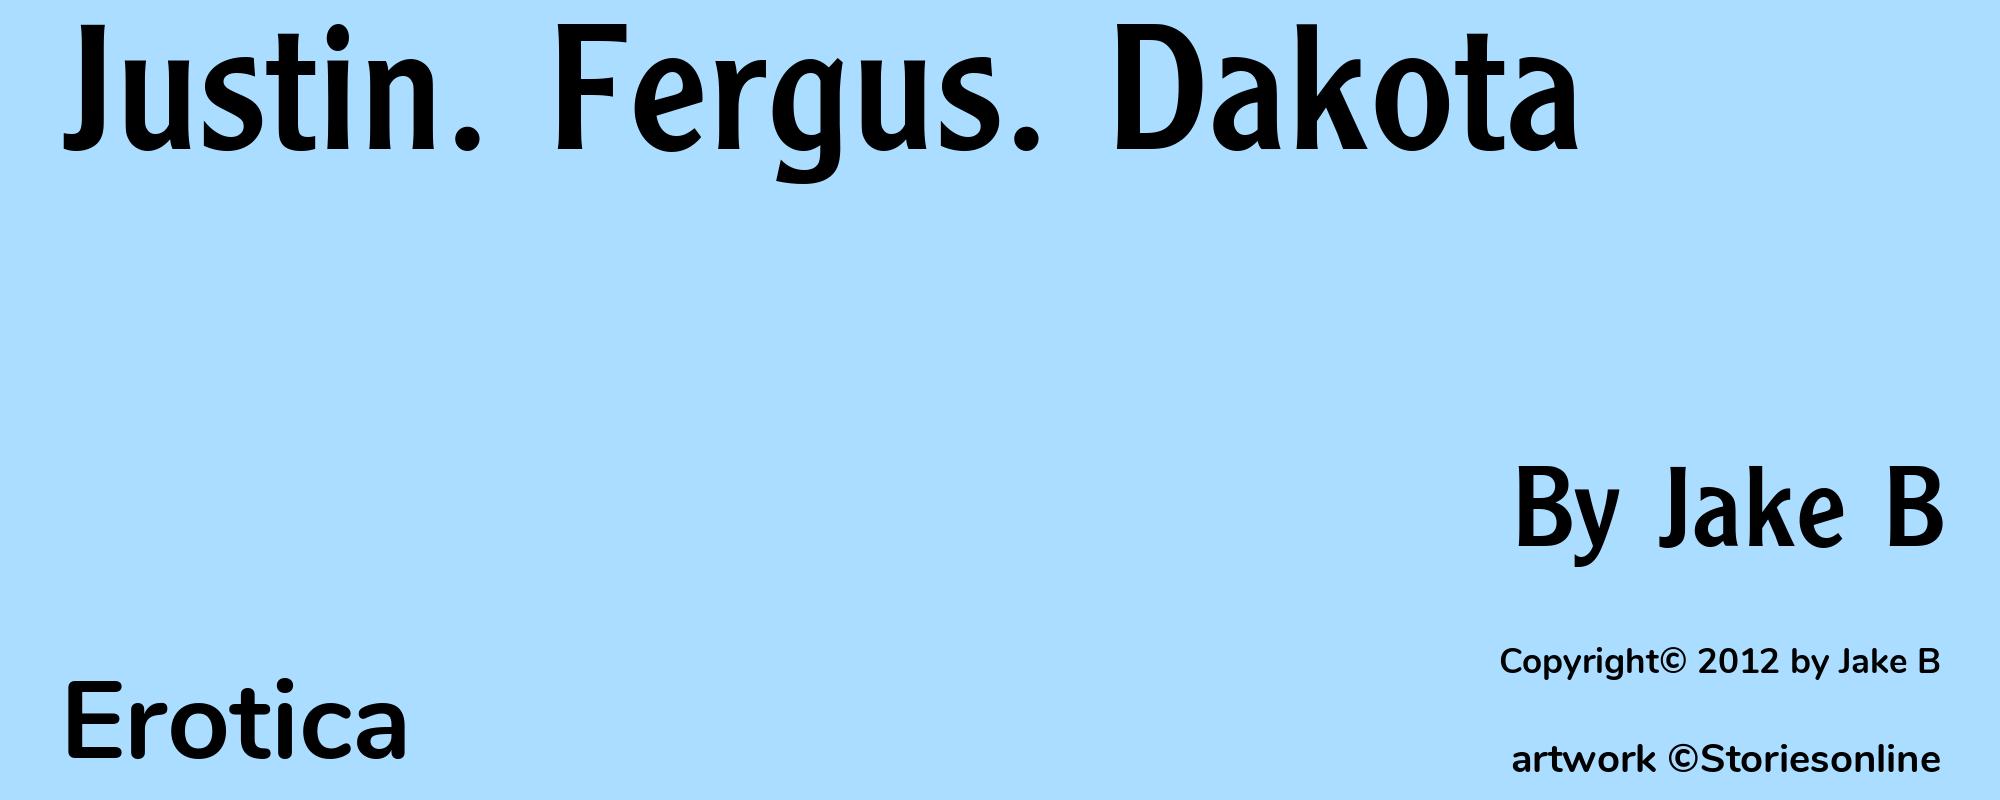 Justin. Fergus. Dakota - Cover